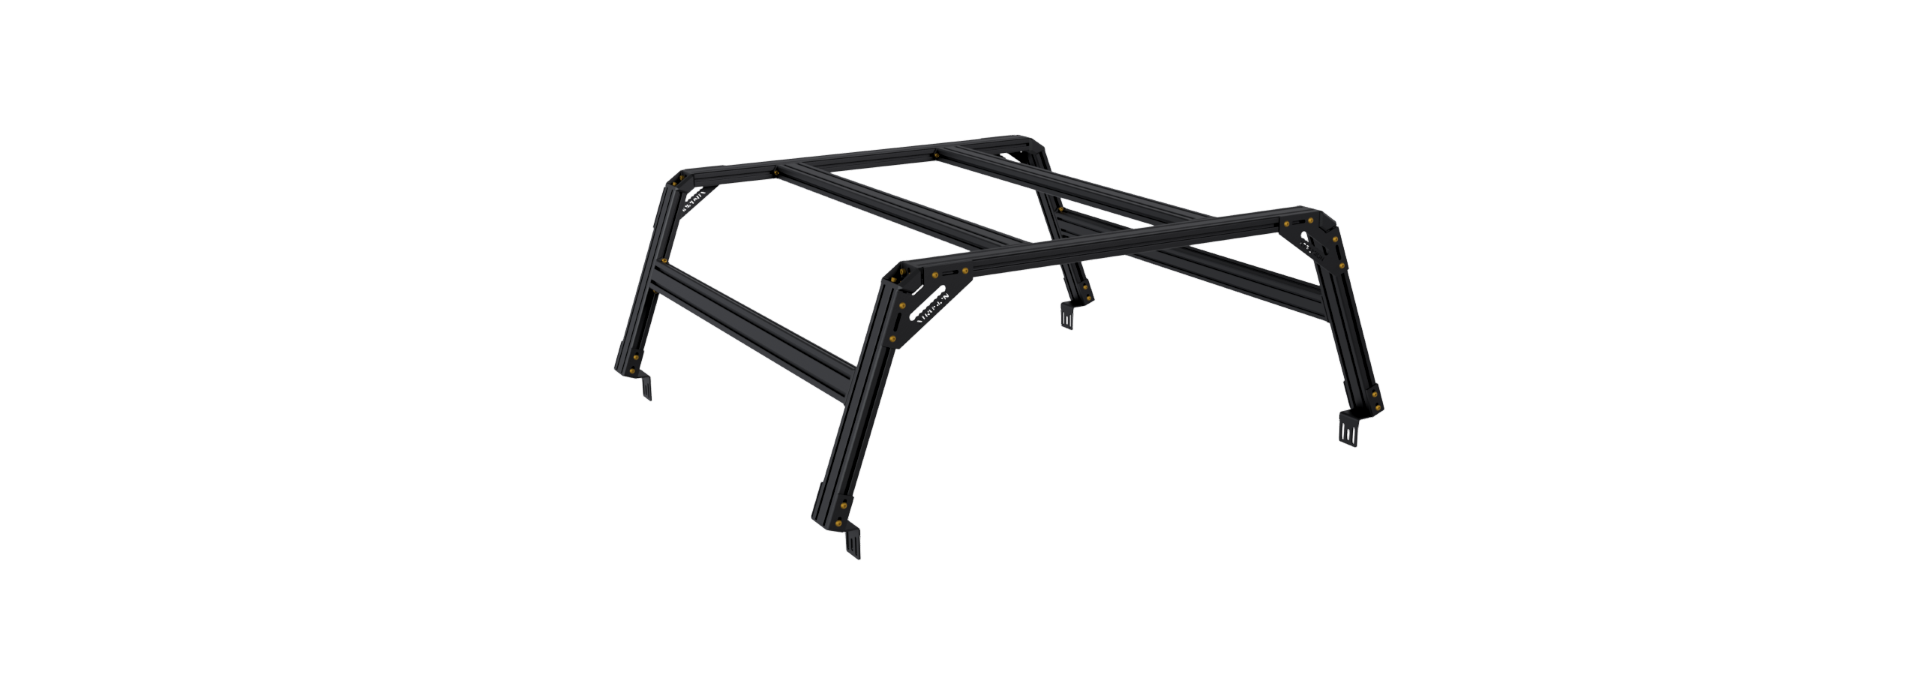 XTR1 Build-Your-Own Bed Rack - Nissan Frontier